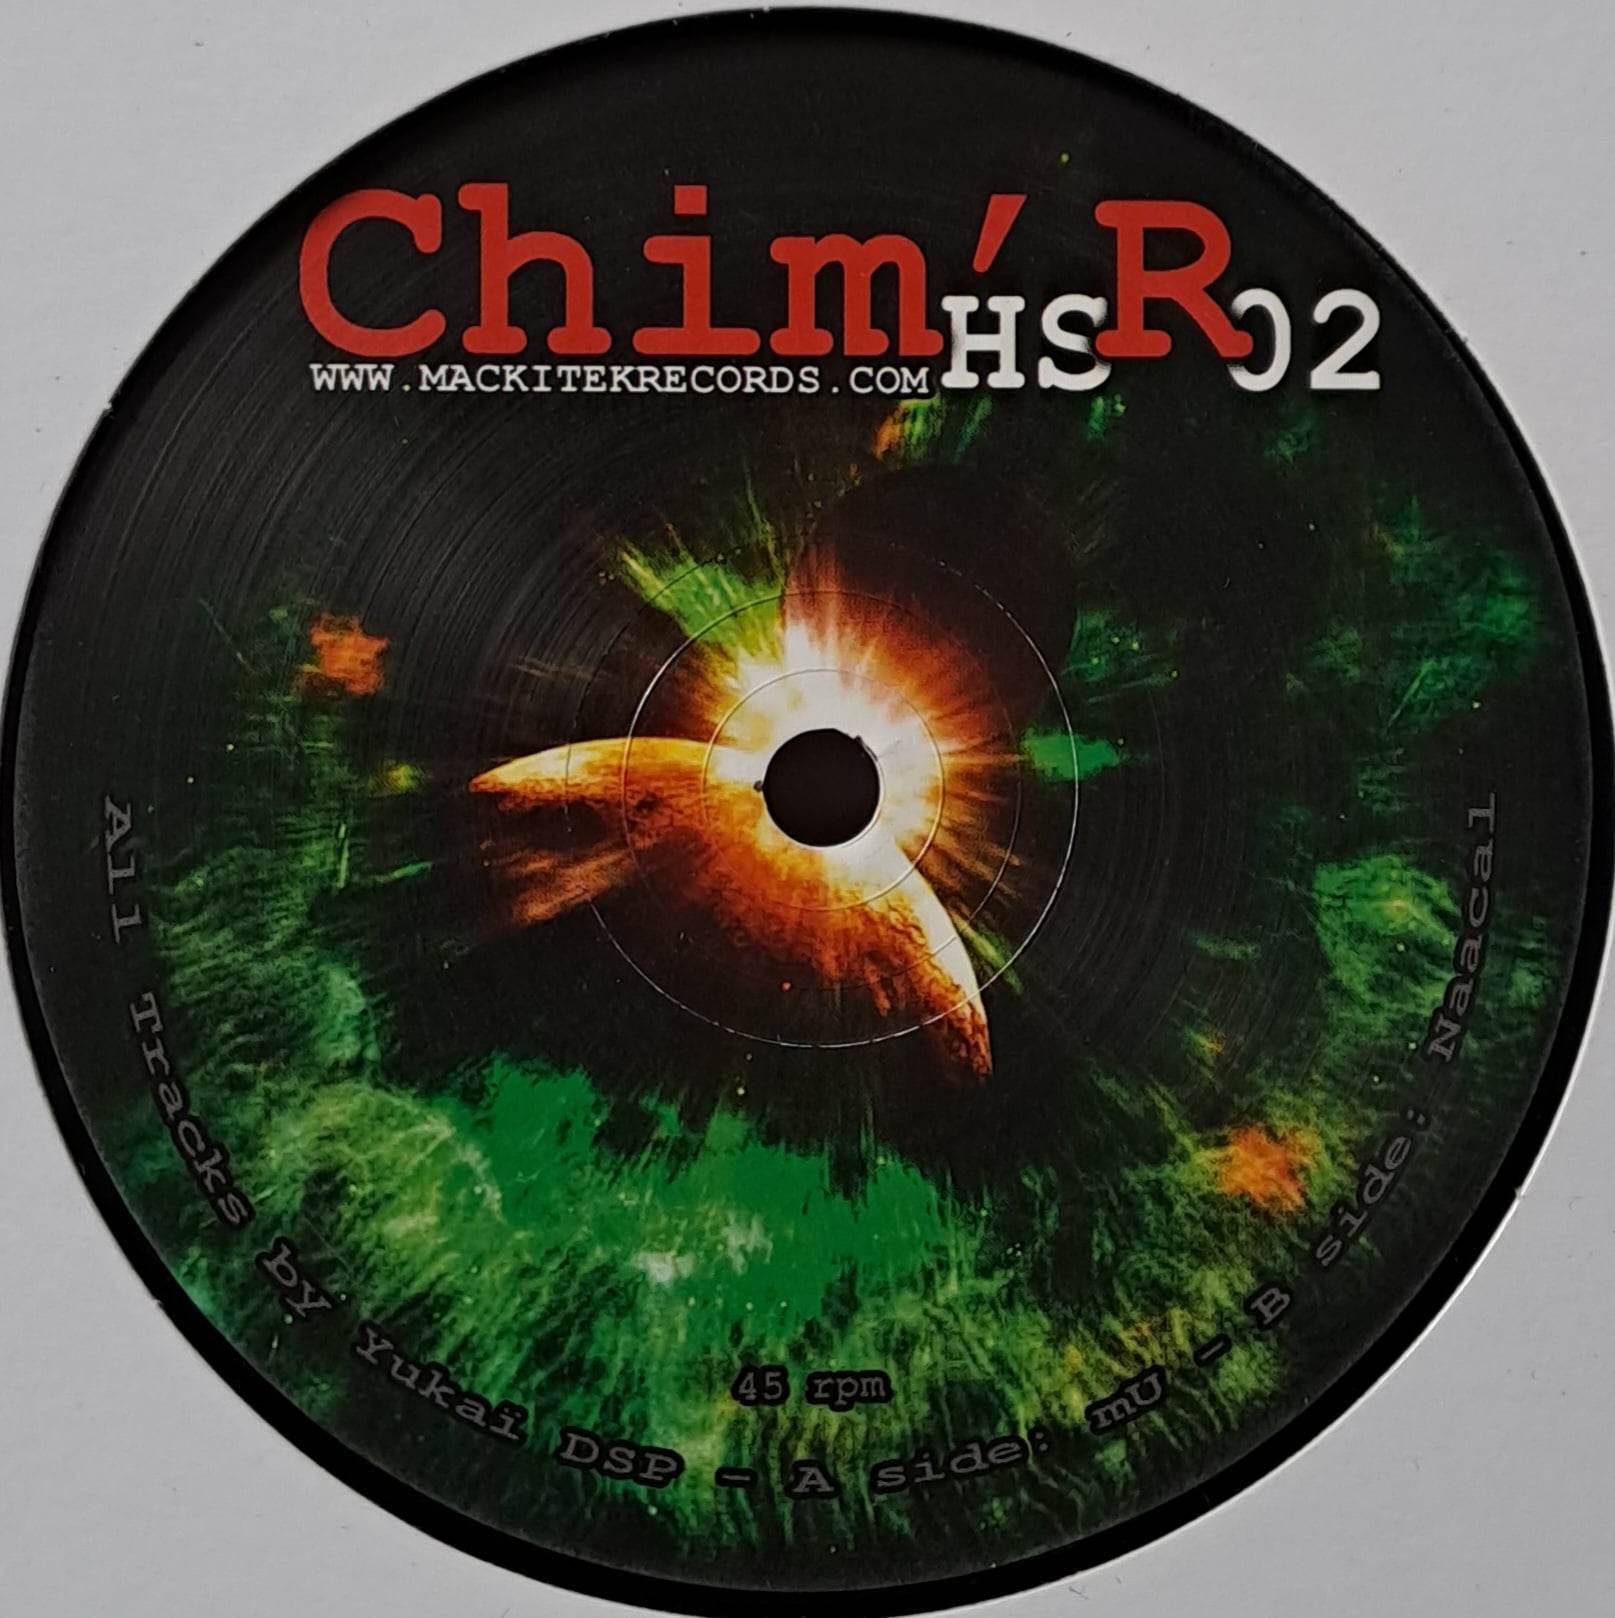 Chim'R HS 02 - vinyle Trance